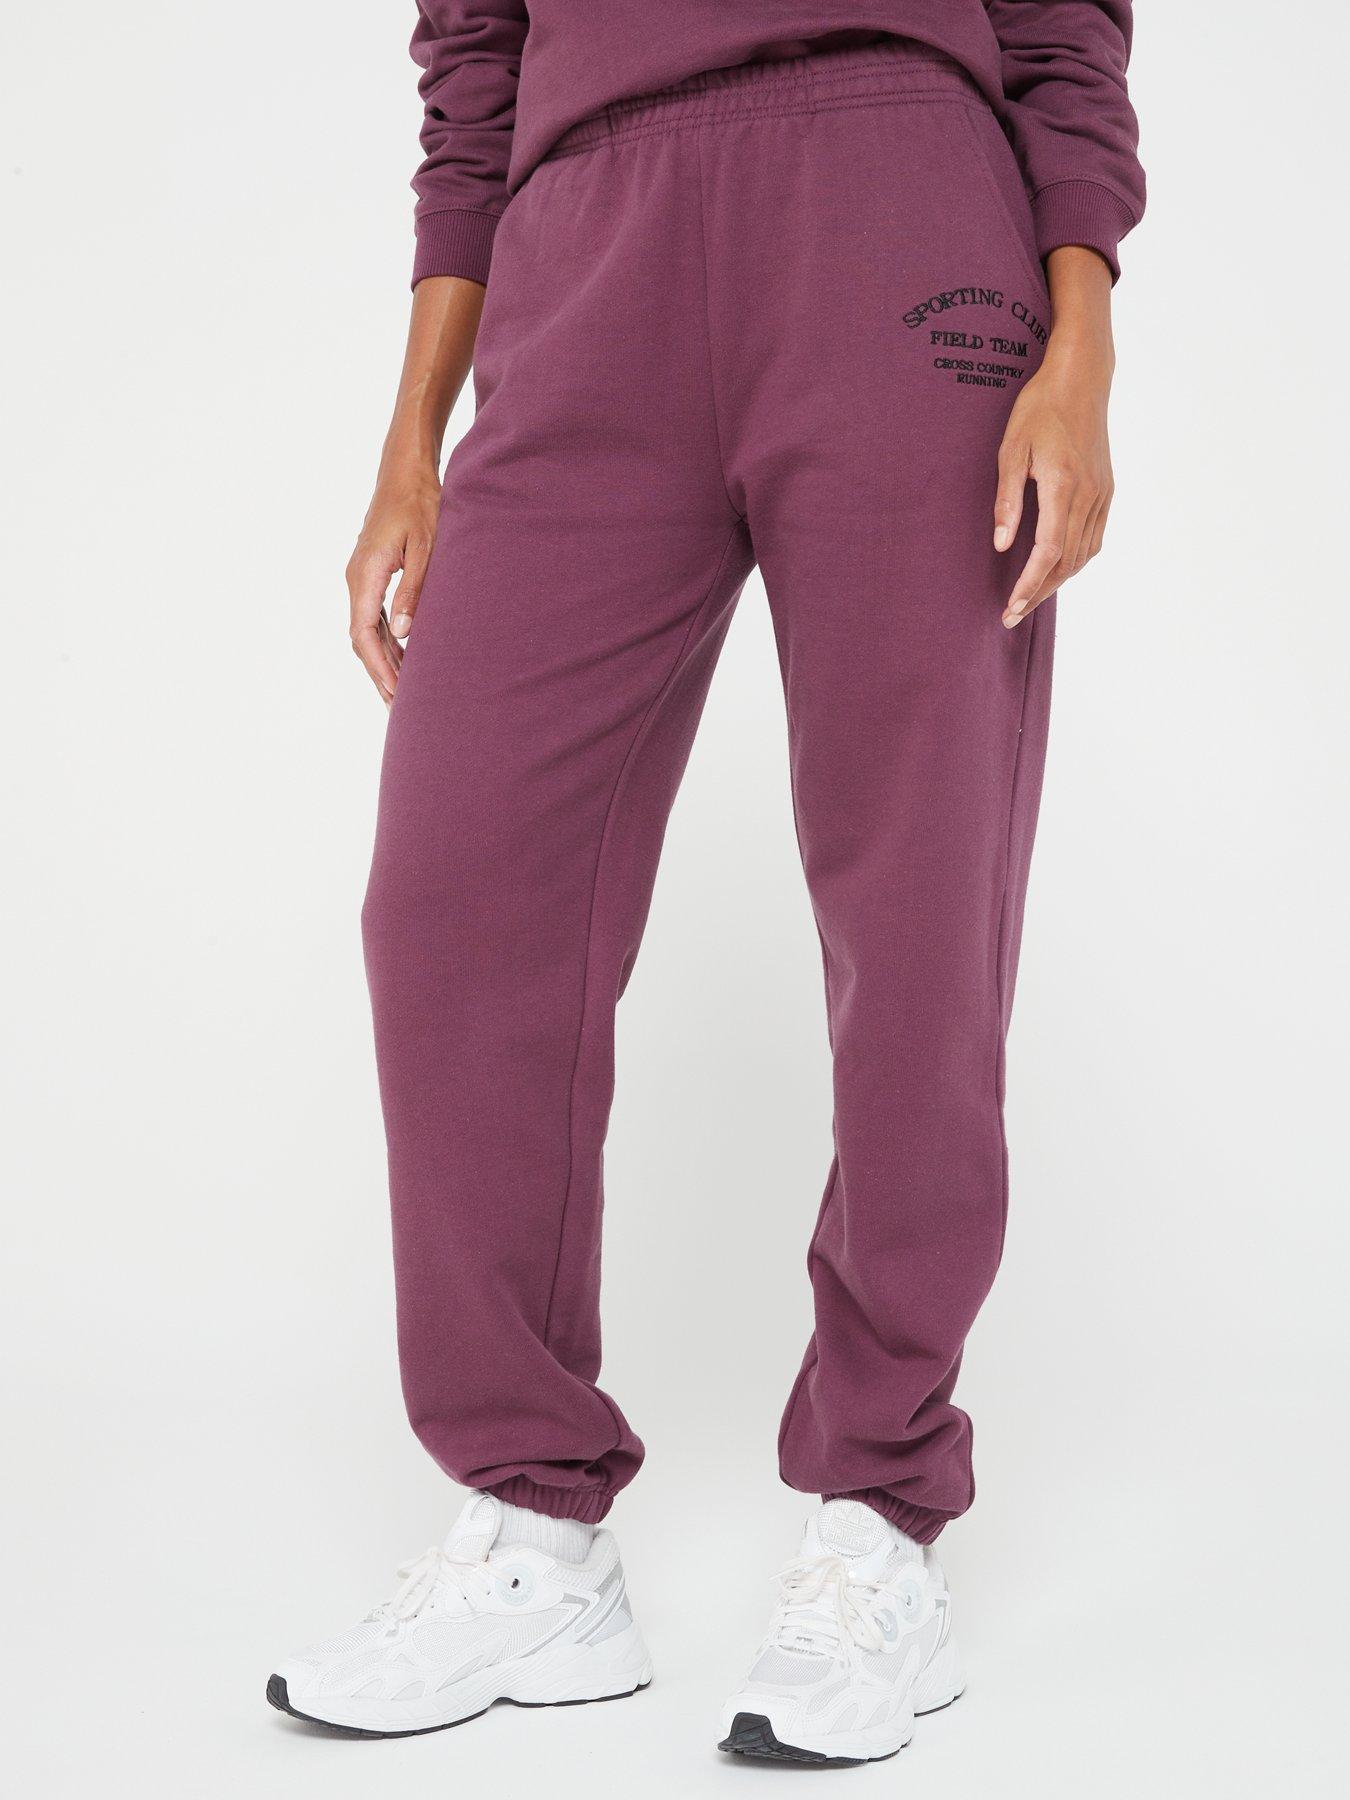 Womens Nike Air 7/8 Fleece Trousers XS Purple Plum Sweatpants Pants Cuffed  Pant